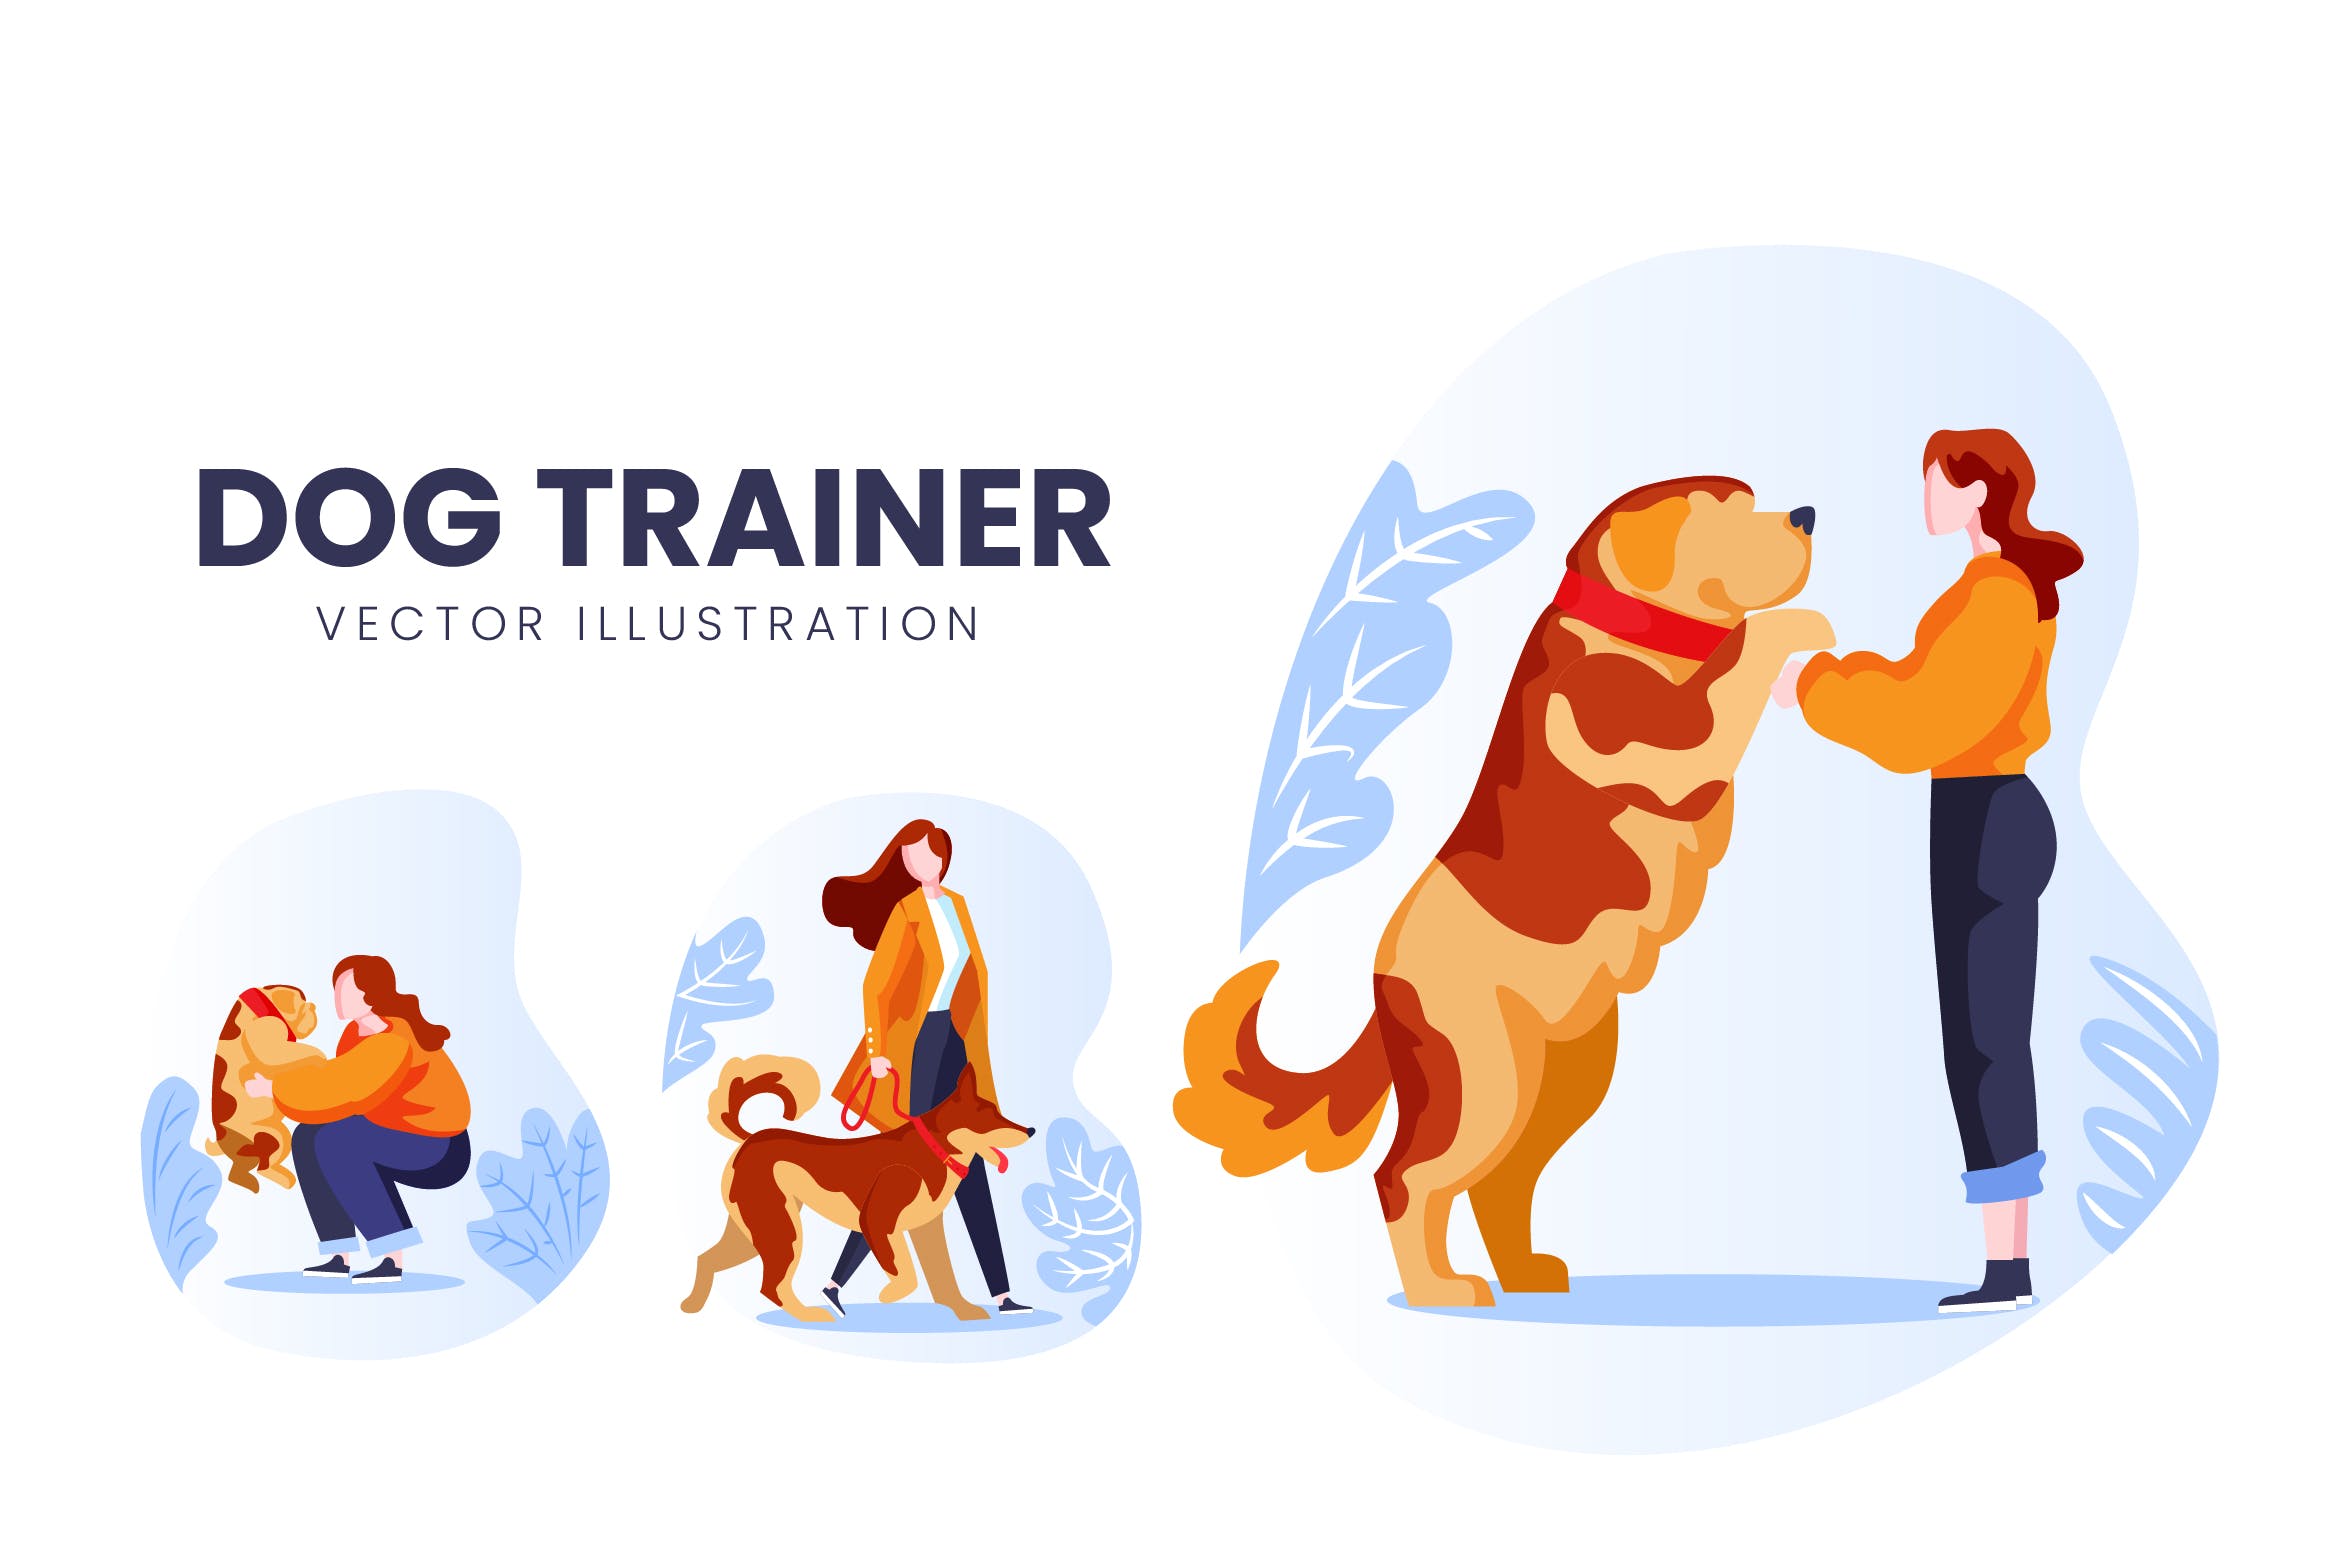 训犬员人物形象素材库精选手绘插画矢量素材 Dog Trainer Vector Character Set插图